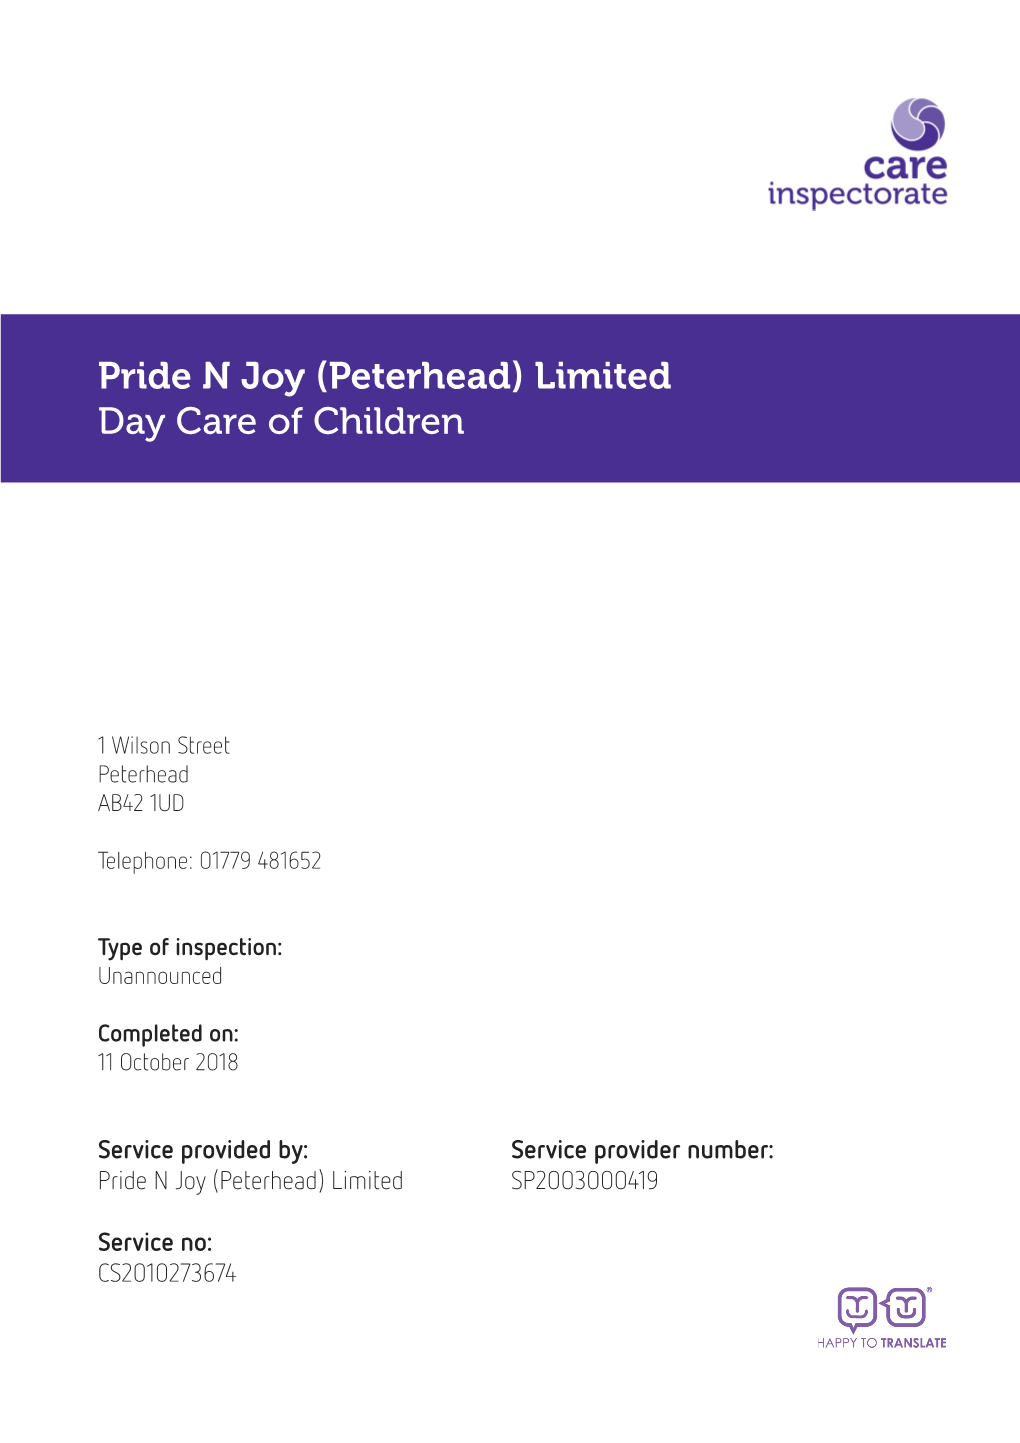 Pride N Joy (Peterhead) Limited Day Care of Children